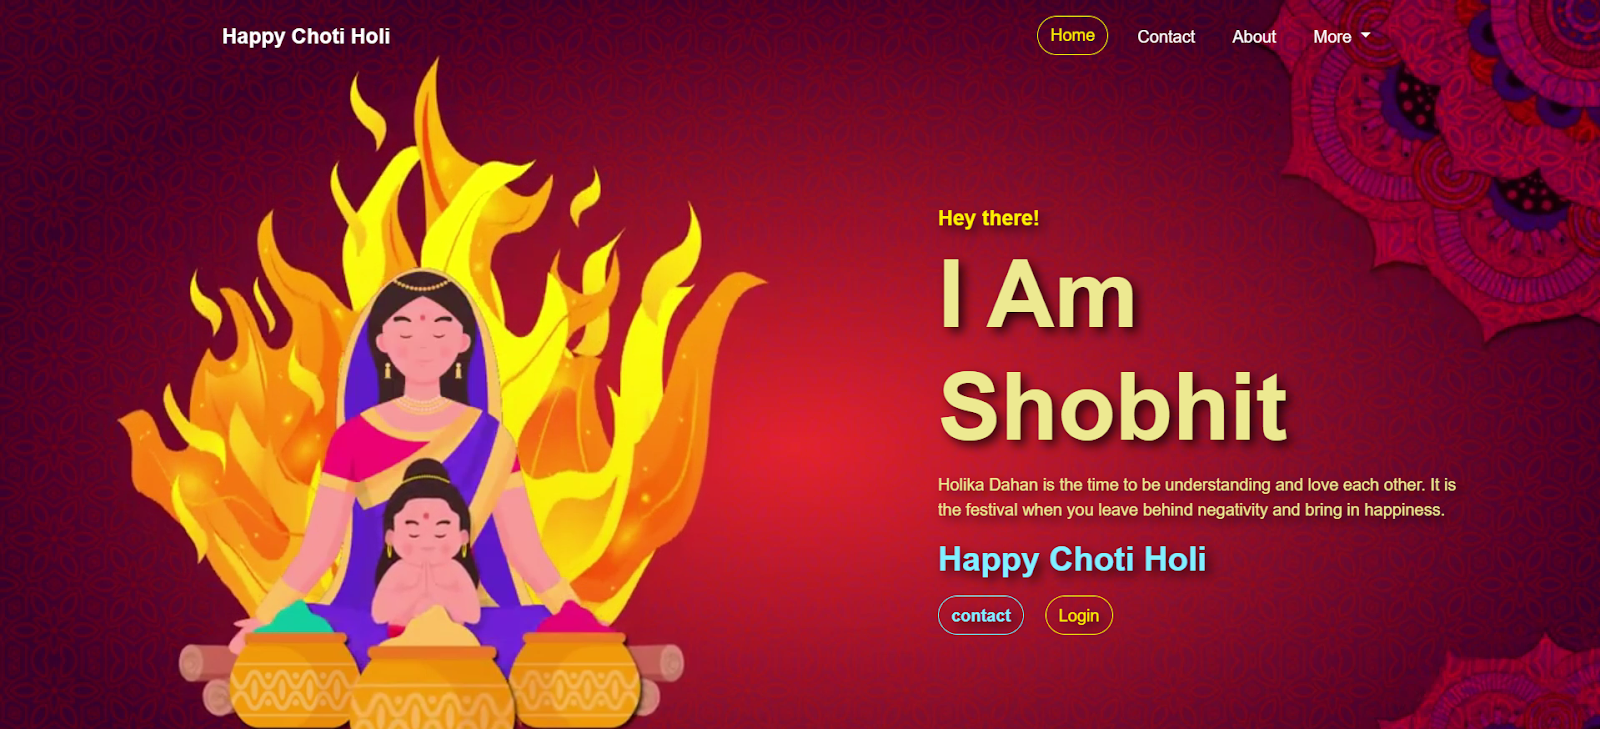 Happy Choti Holi Animation Using HTML And CSS /Holika Dahan Using HTML And CSS